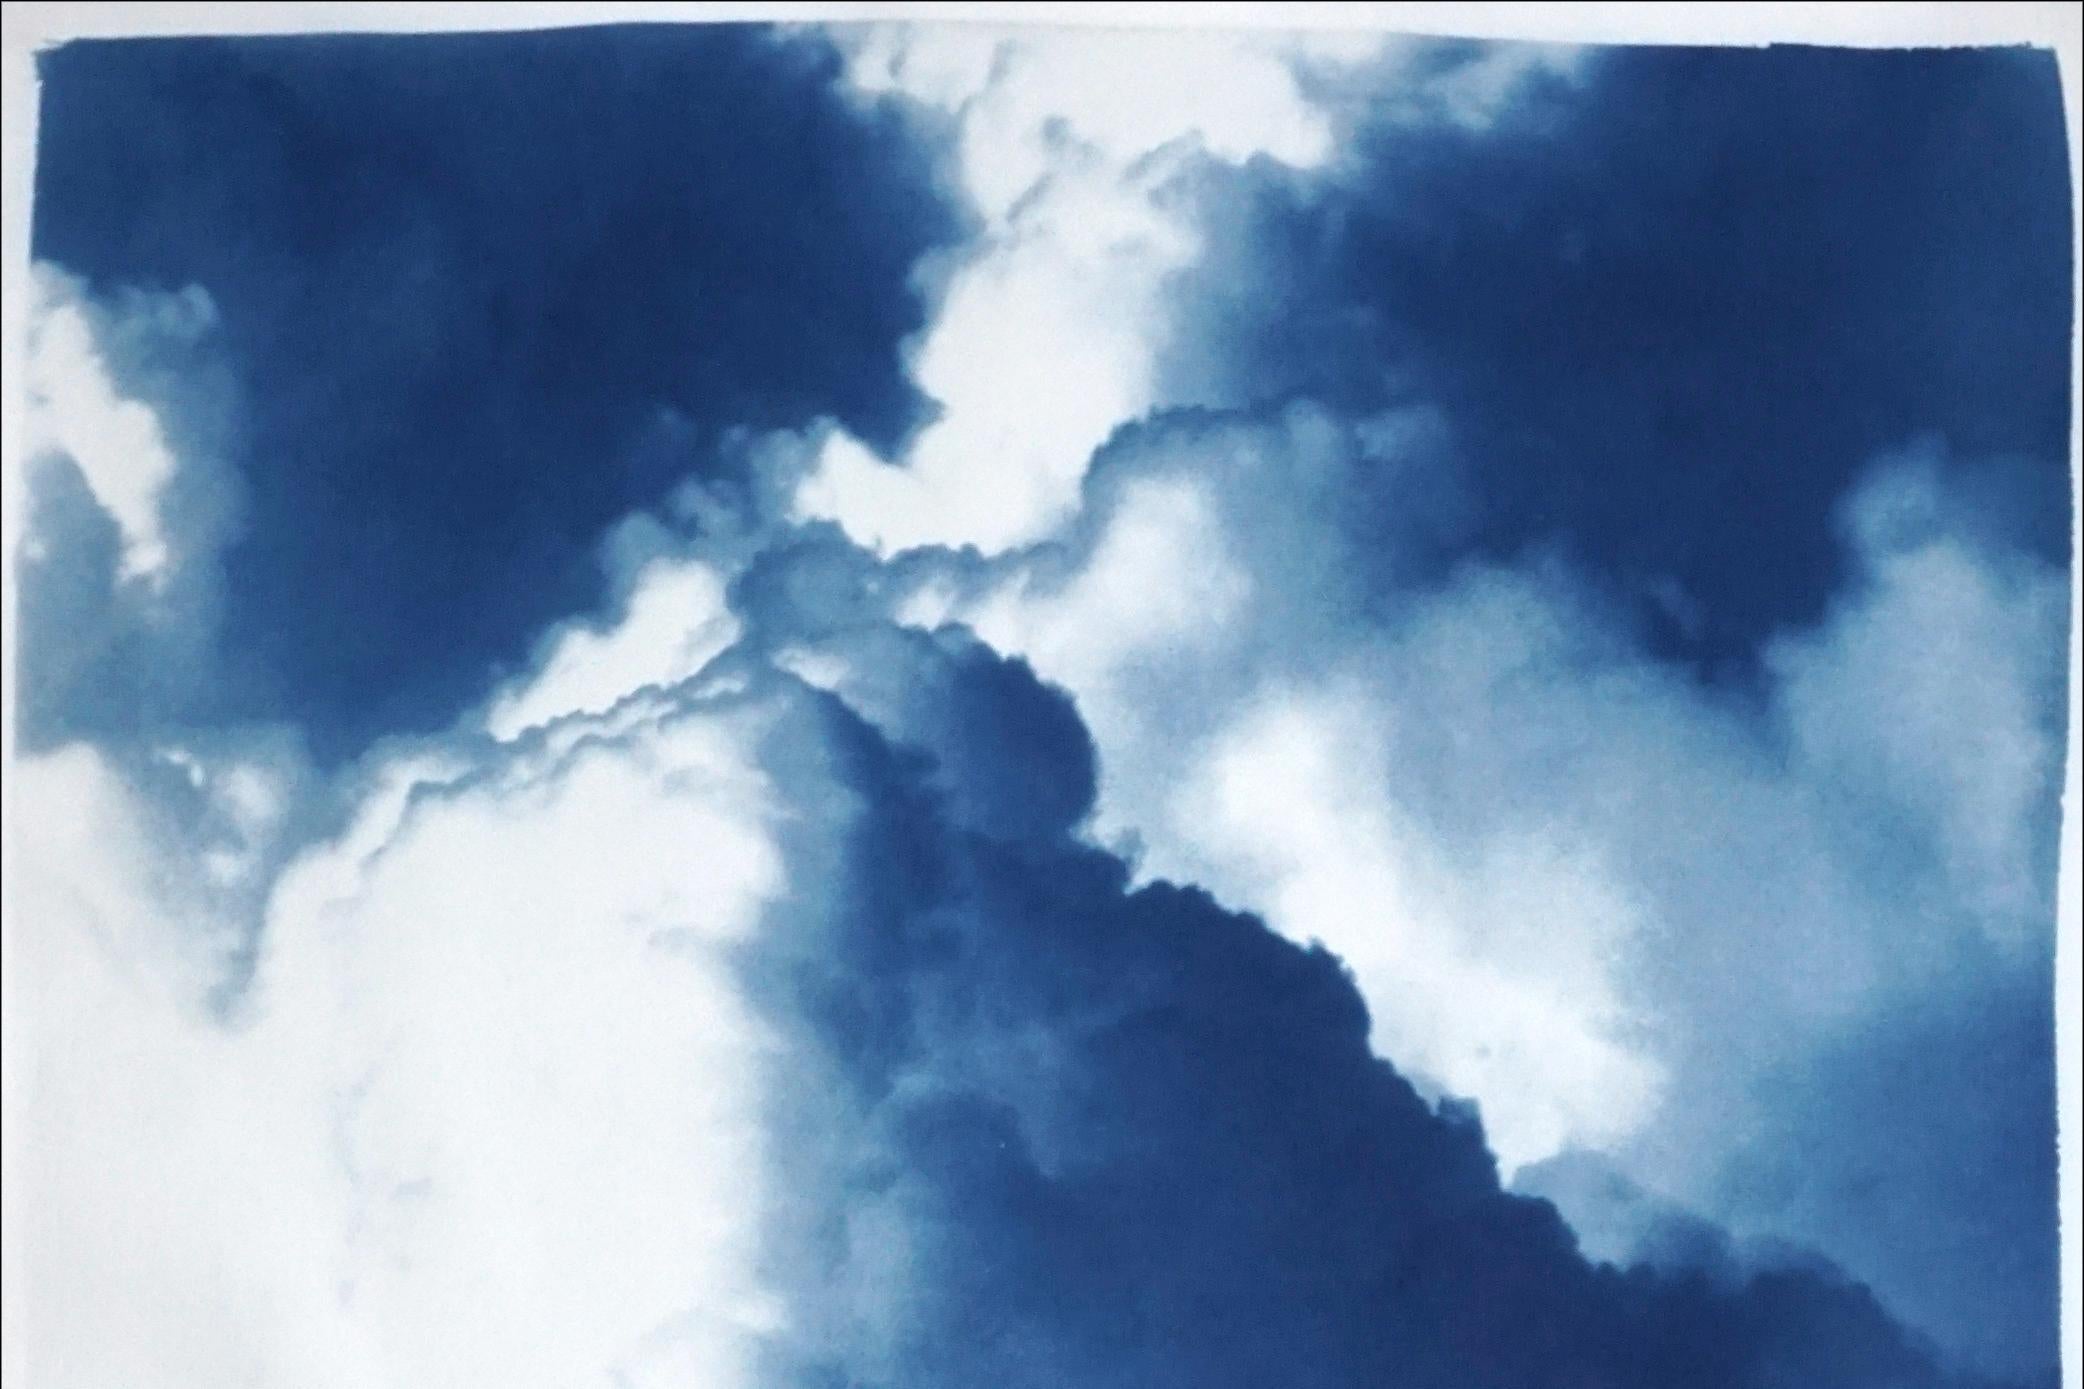 Dense Rolling Clouds, Blue Sky Landscape Triptych, Handmade Cyanotype on Paper 2